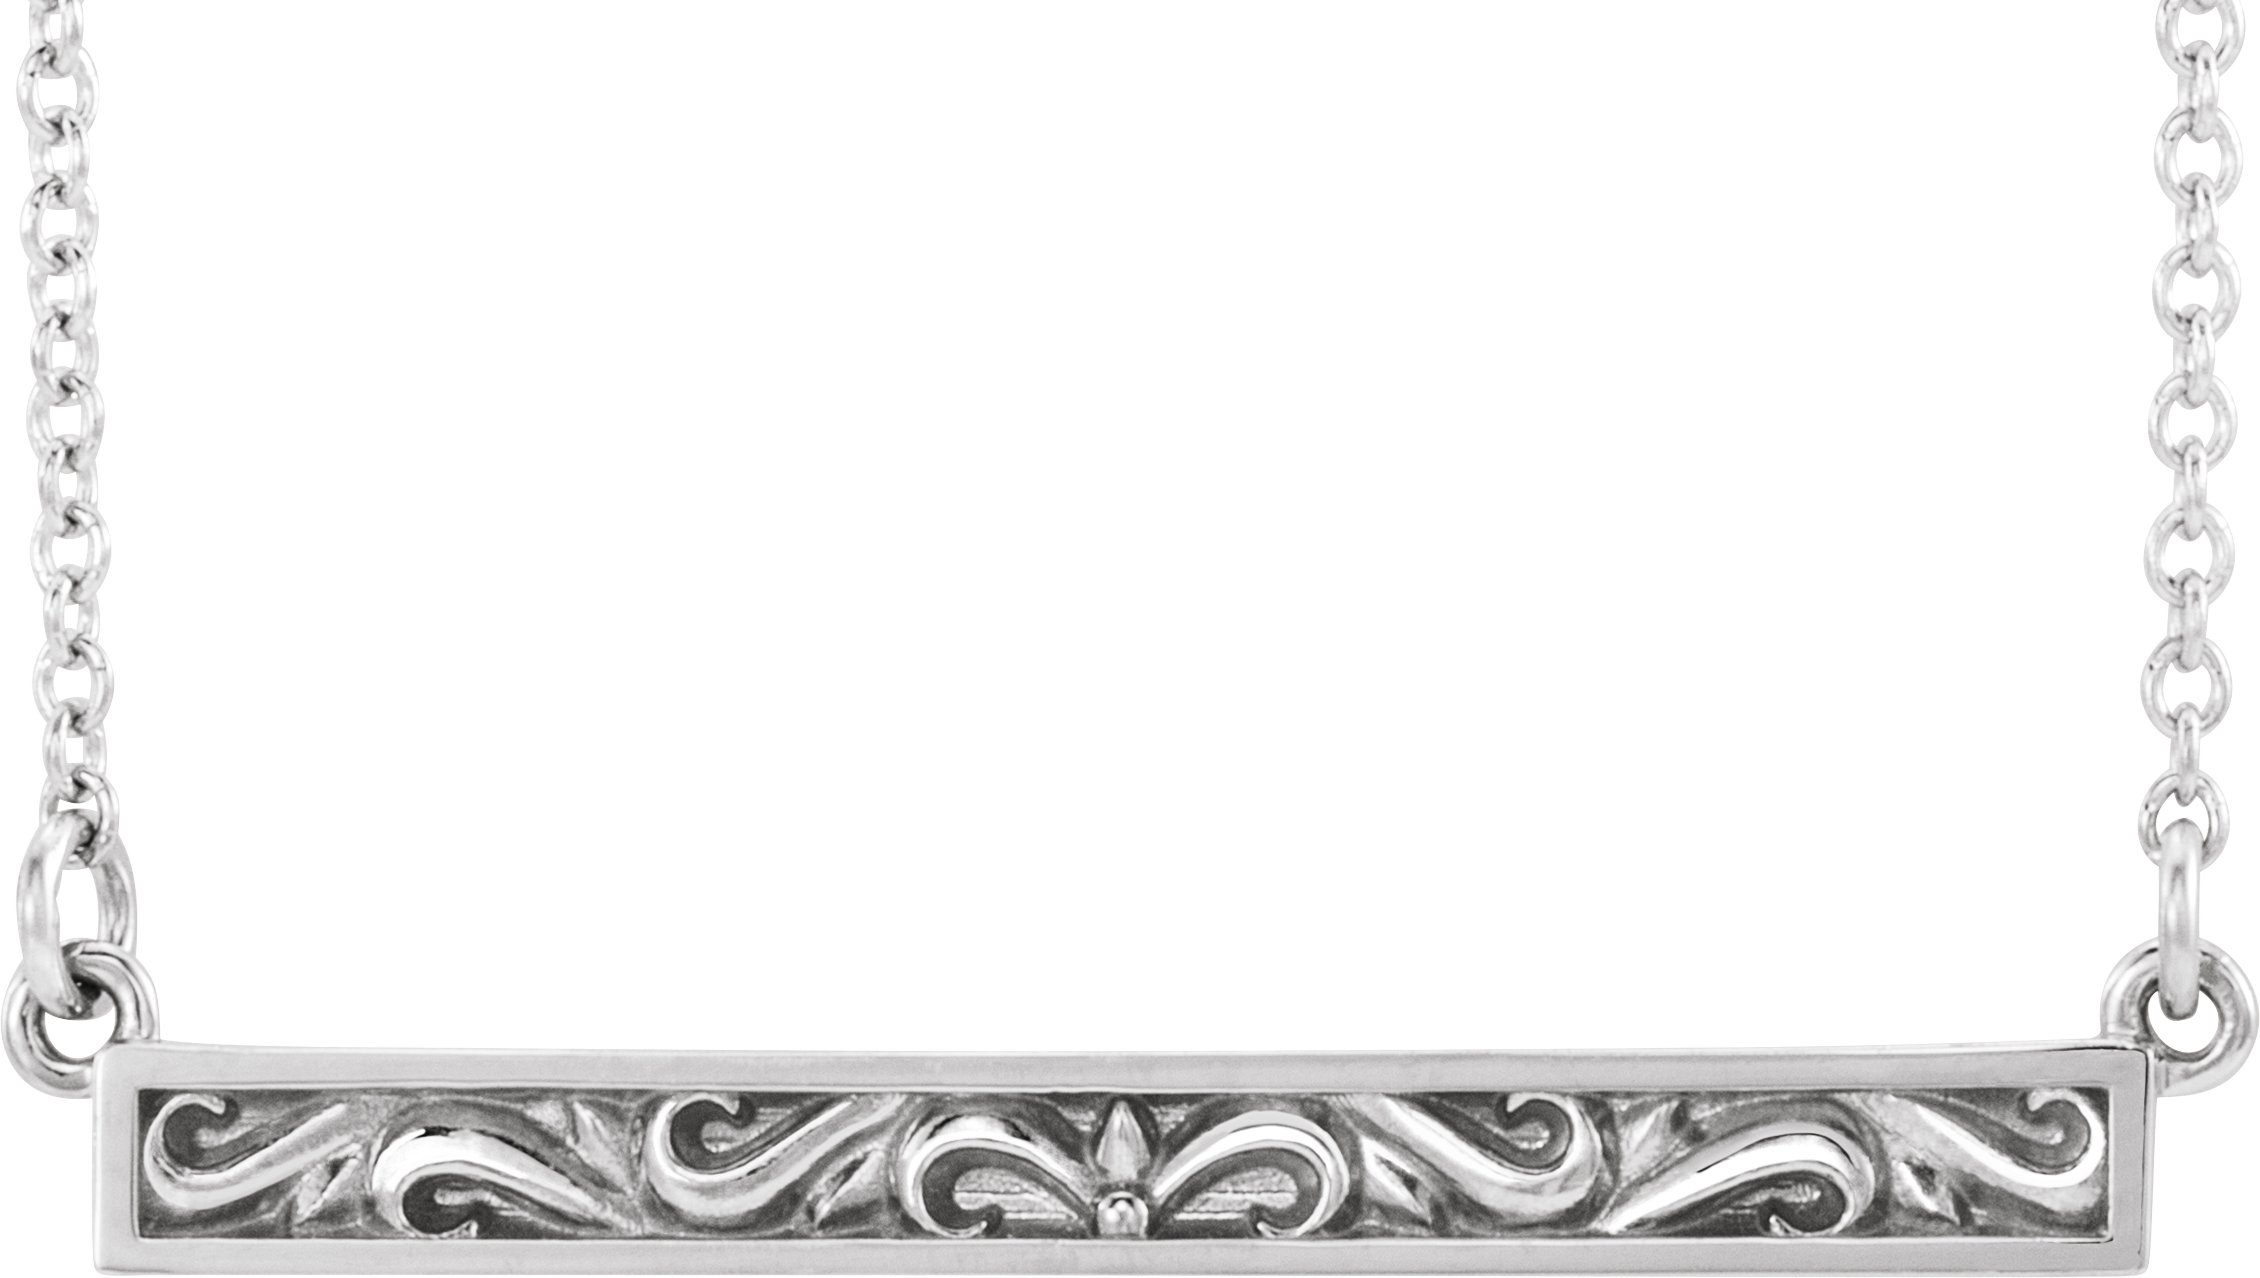 Platinum Sculptural-Inspired Bar 16-18" Necklace